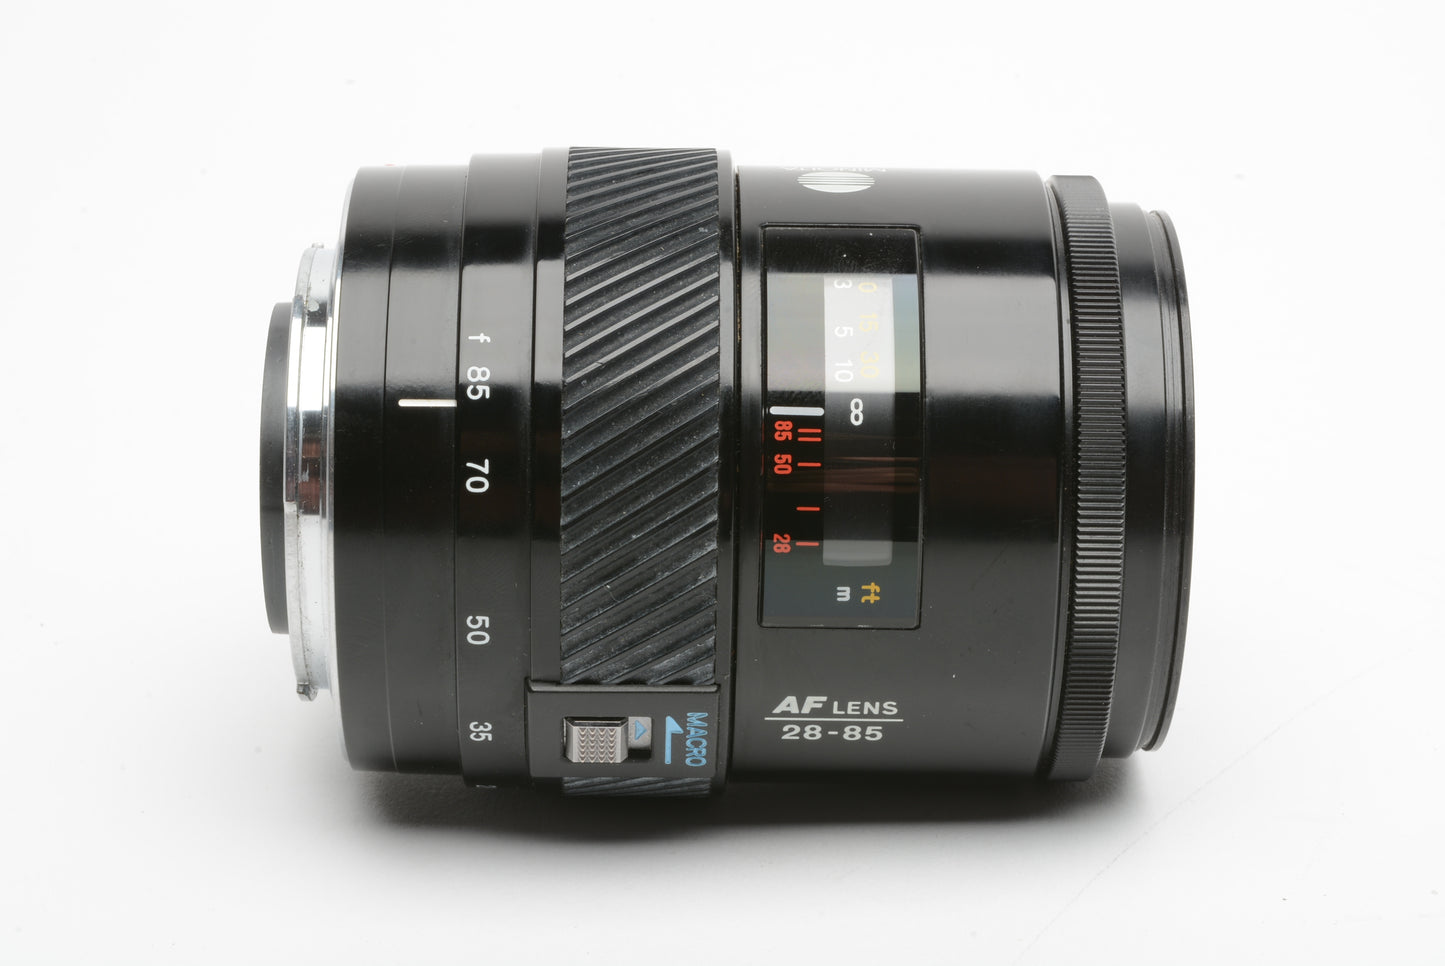 Minolta Maxxum AF 28-85mm f3.5-4.5 zoom lens, caps, hood, great glass, nice!